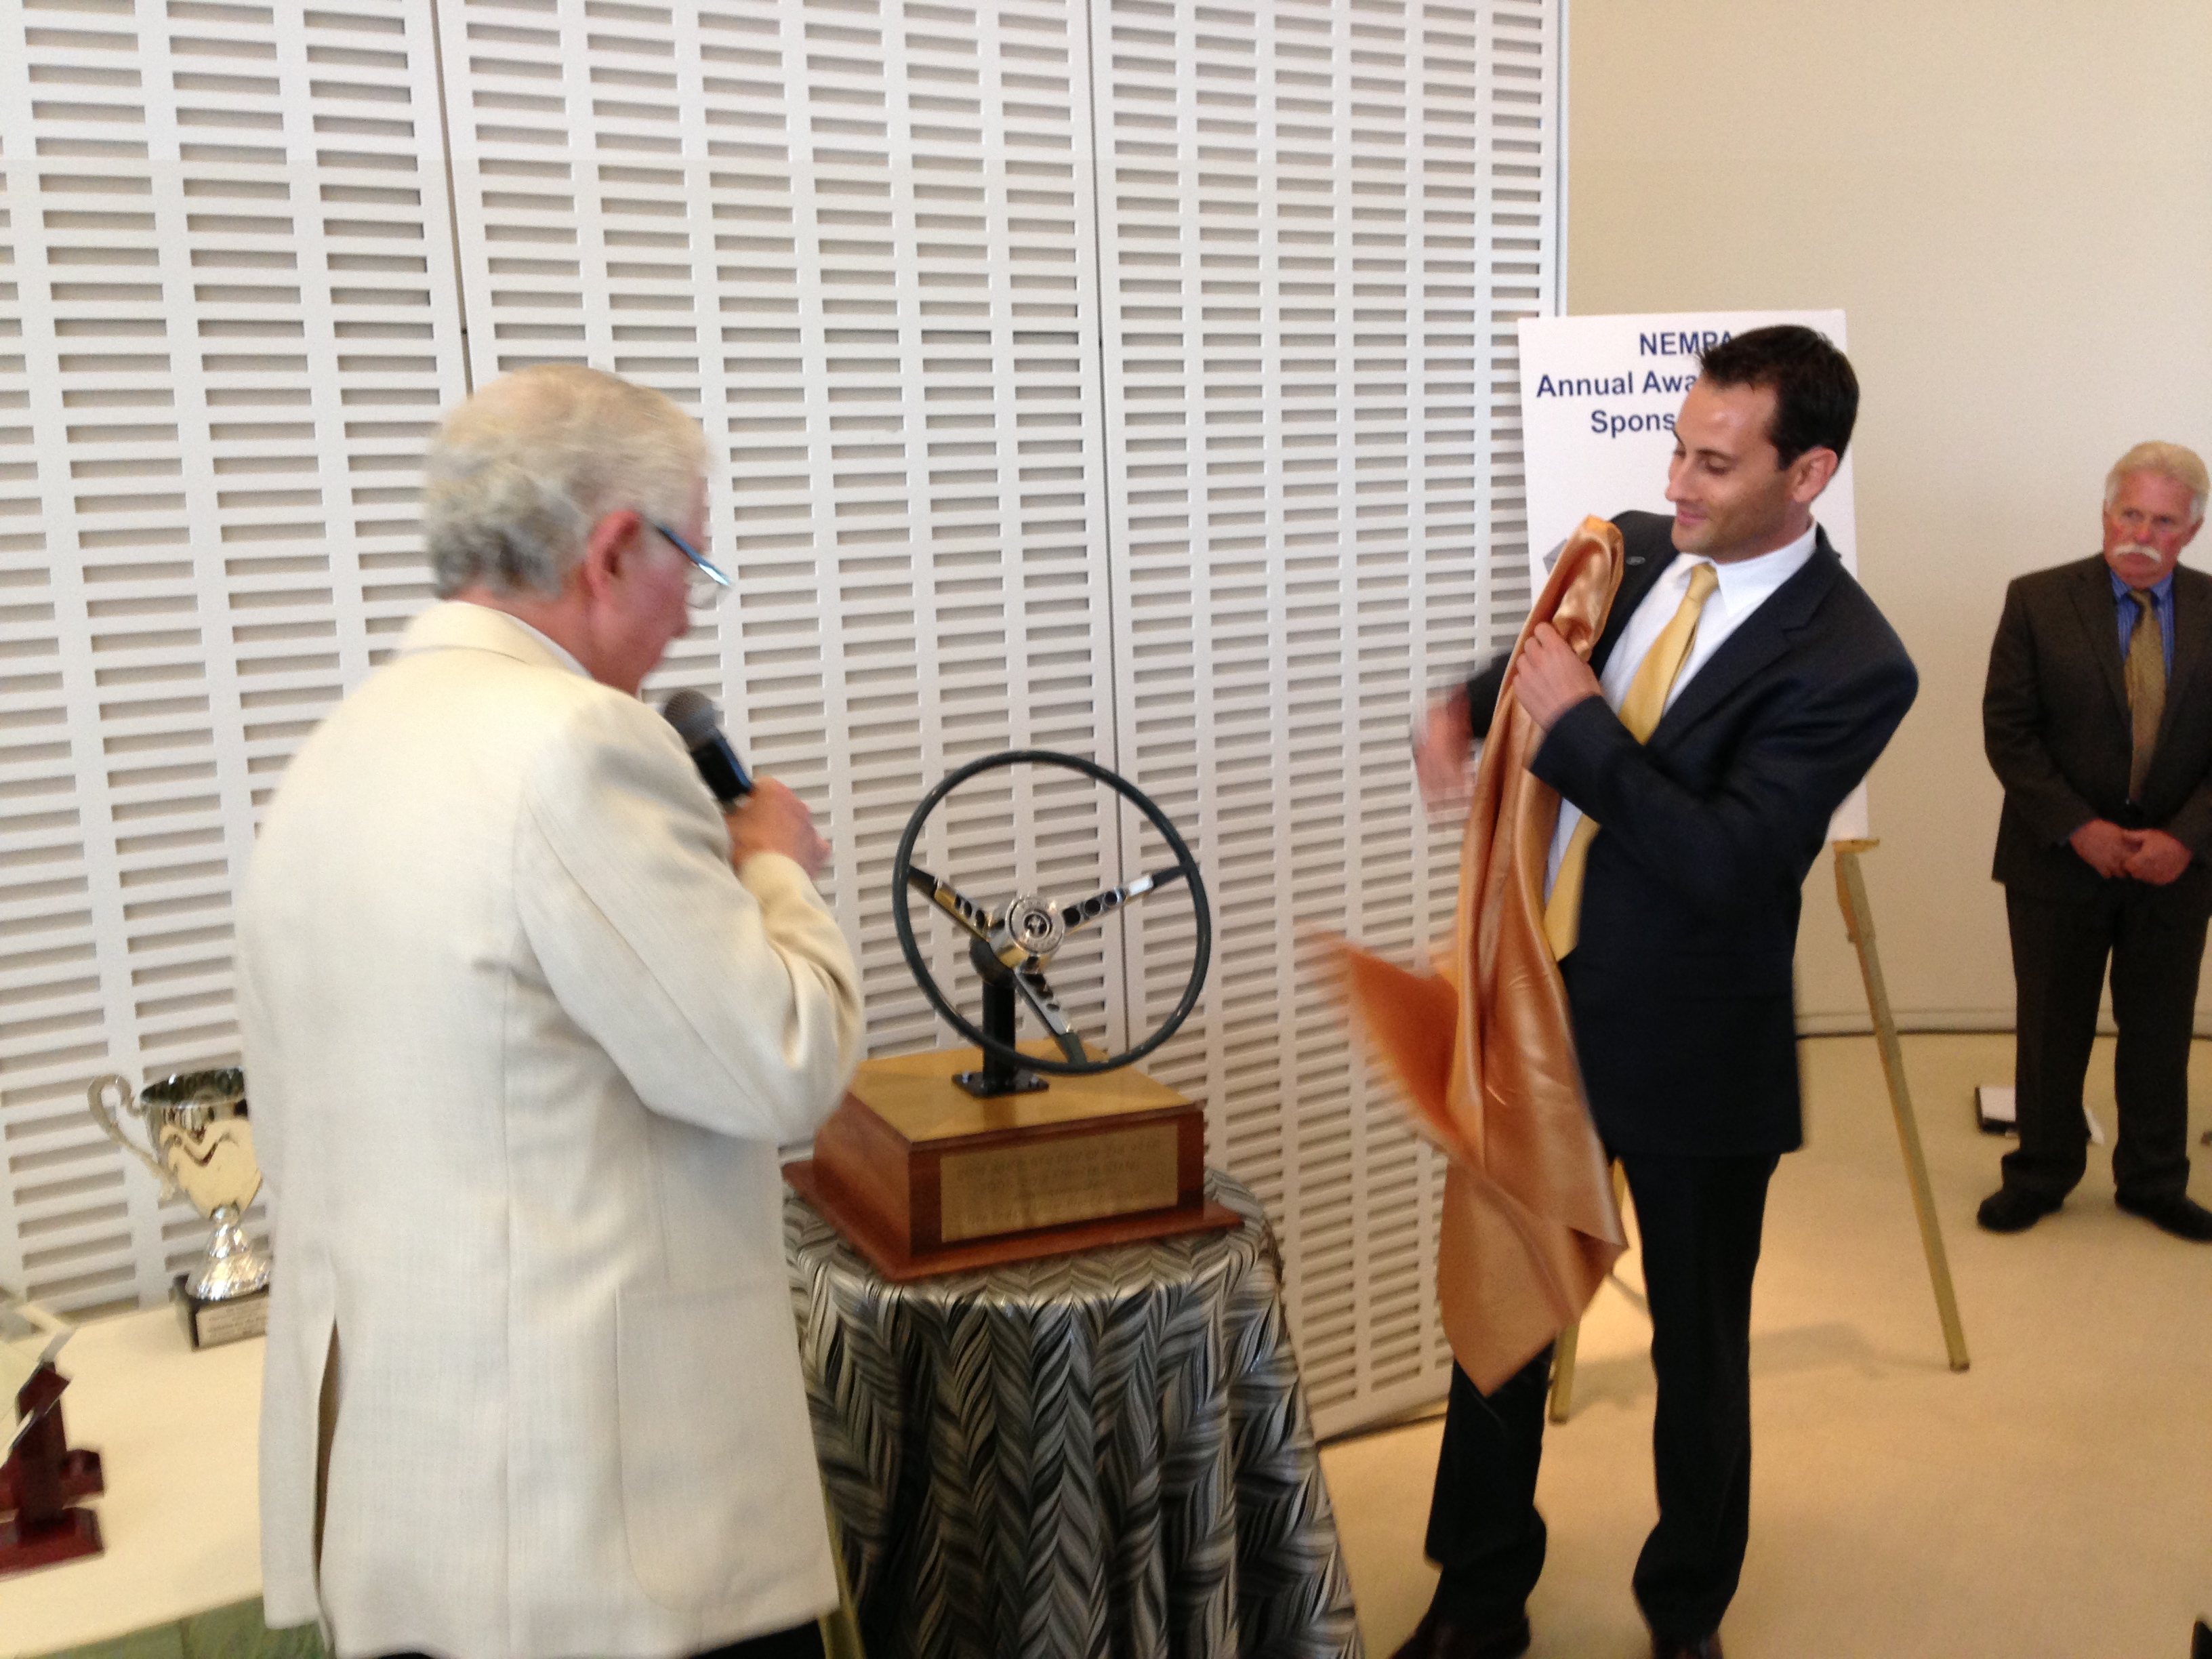 Ken Karwowski unveils the POV Trophy